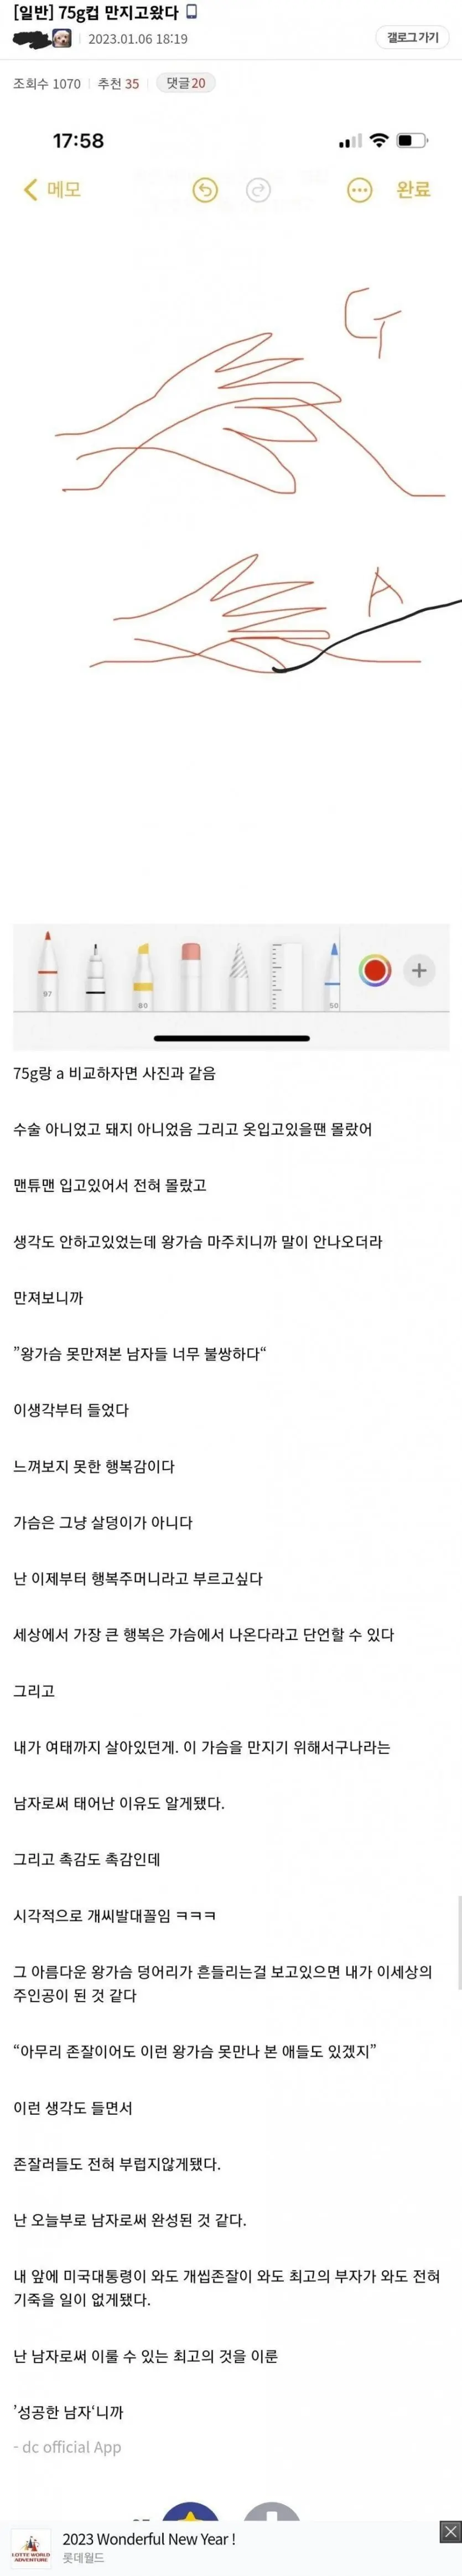 75G컵 가슴 큰 여자 만나본 후기 | mbong.kr 엠봉